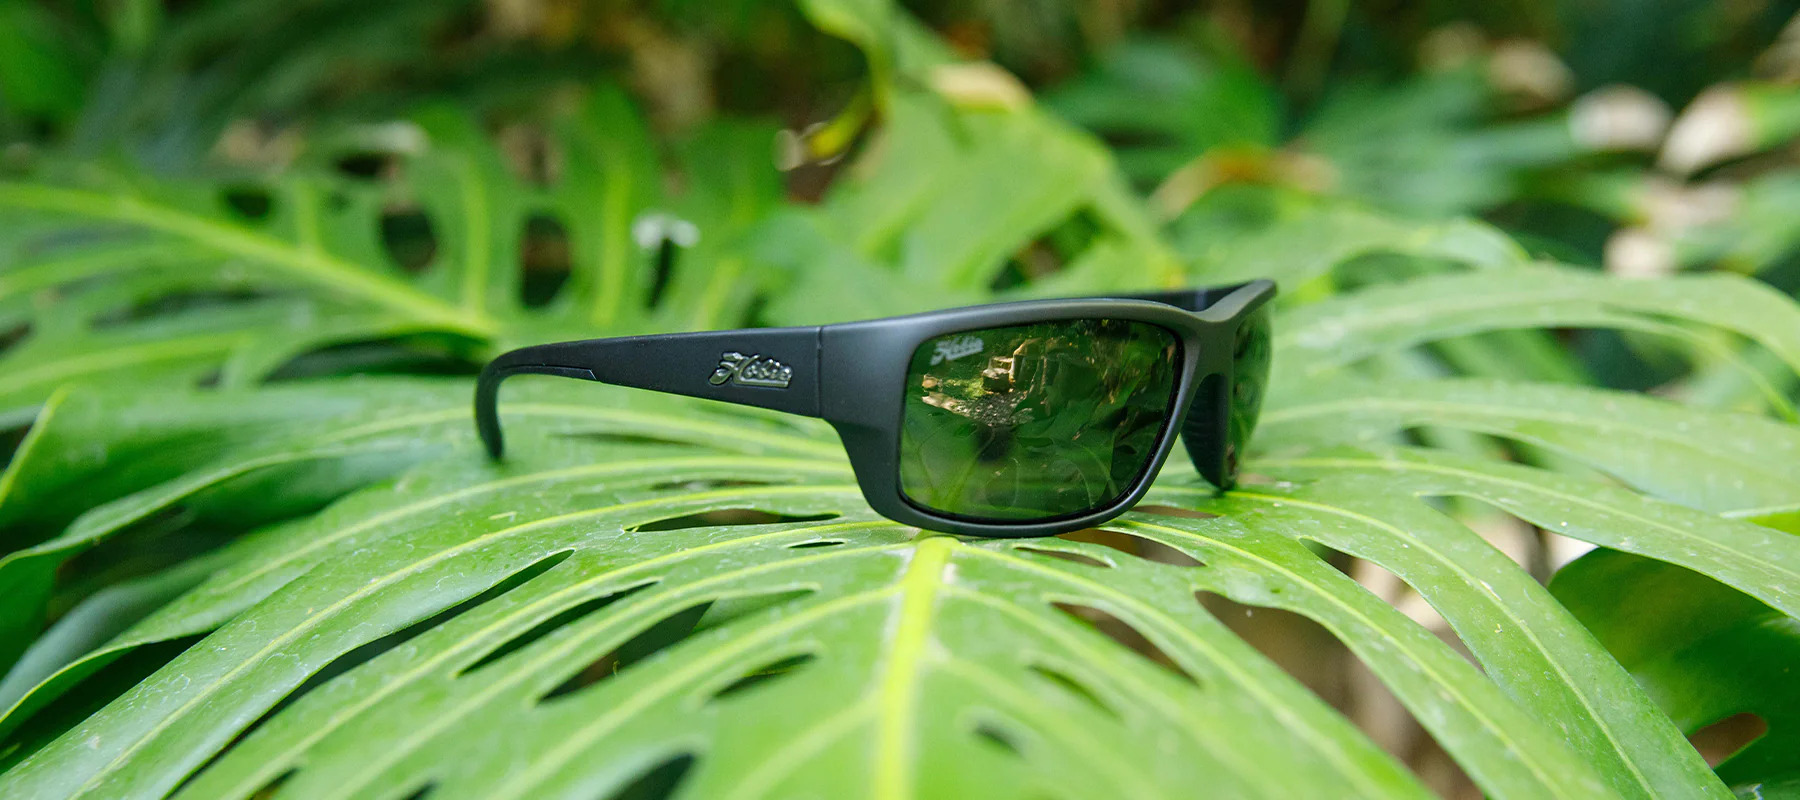 Hobie Eyewear Snook fishing sunglasses sitting on a plant leaf